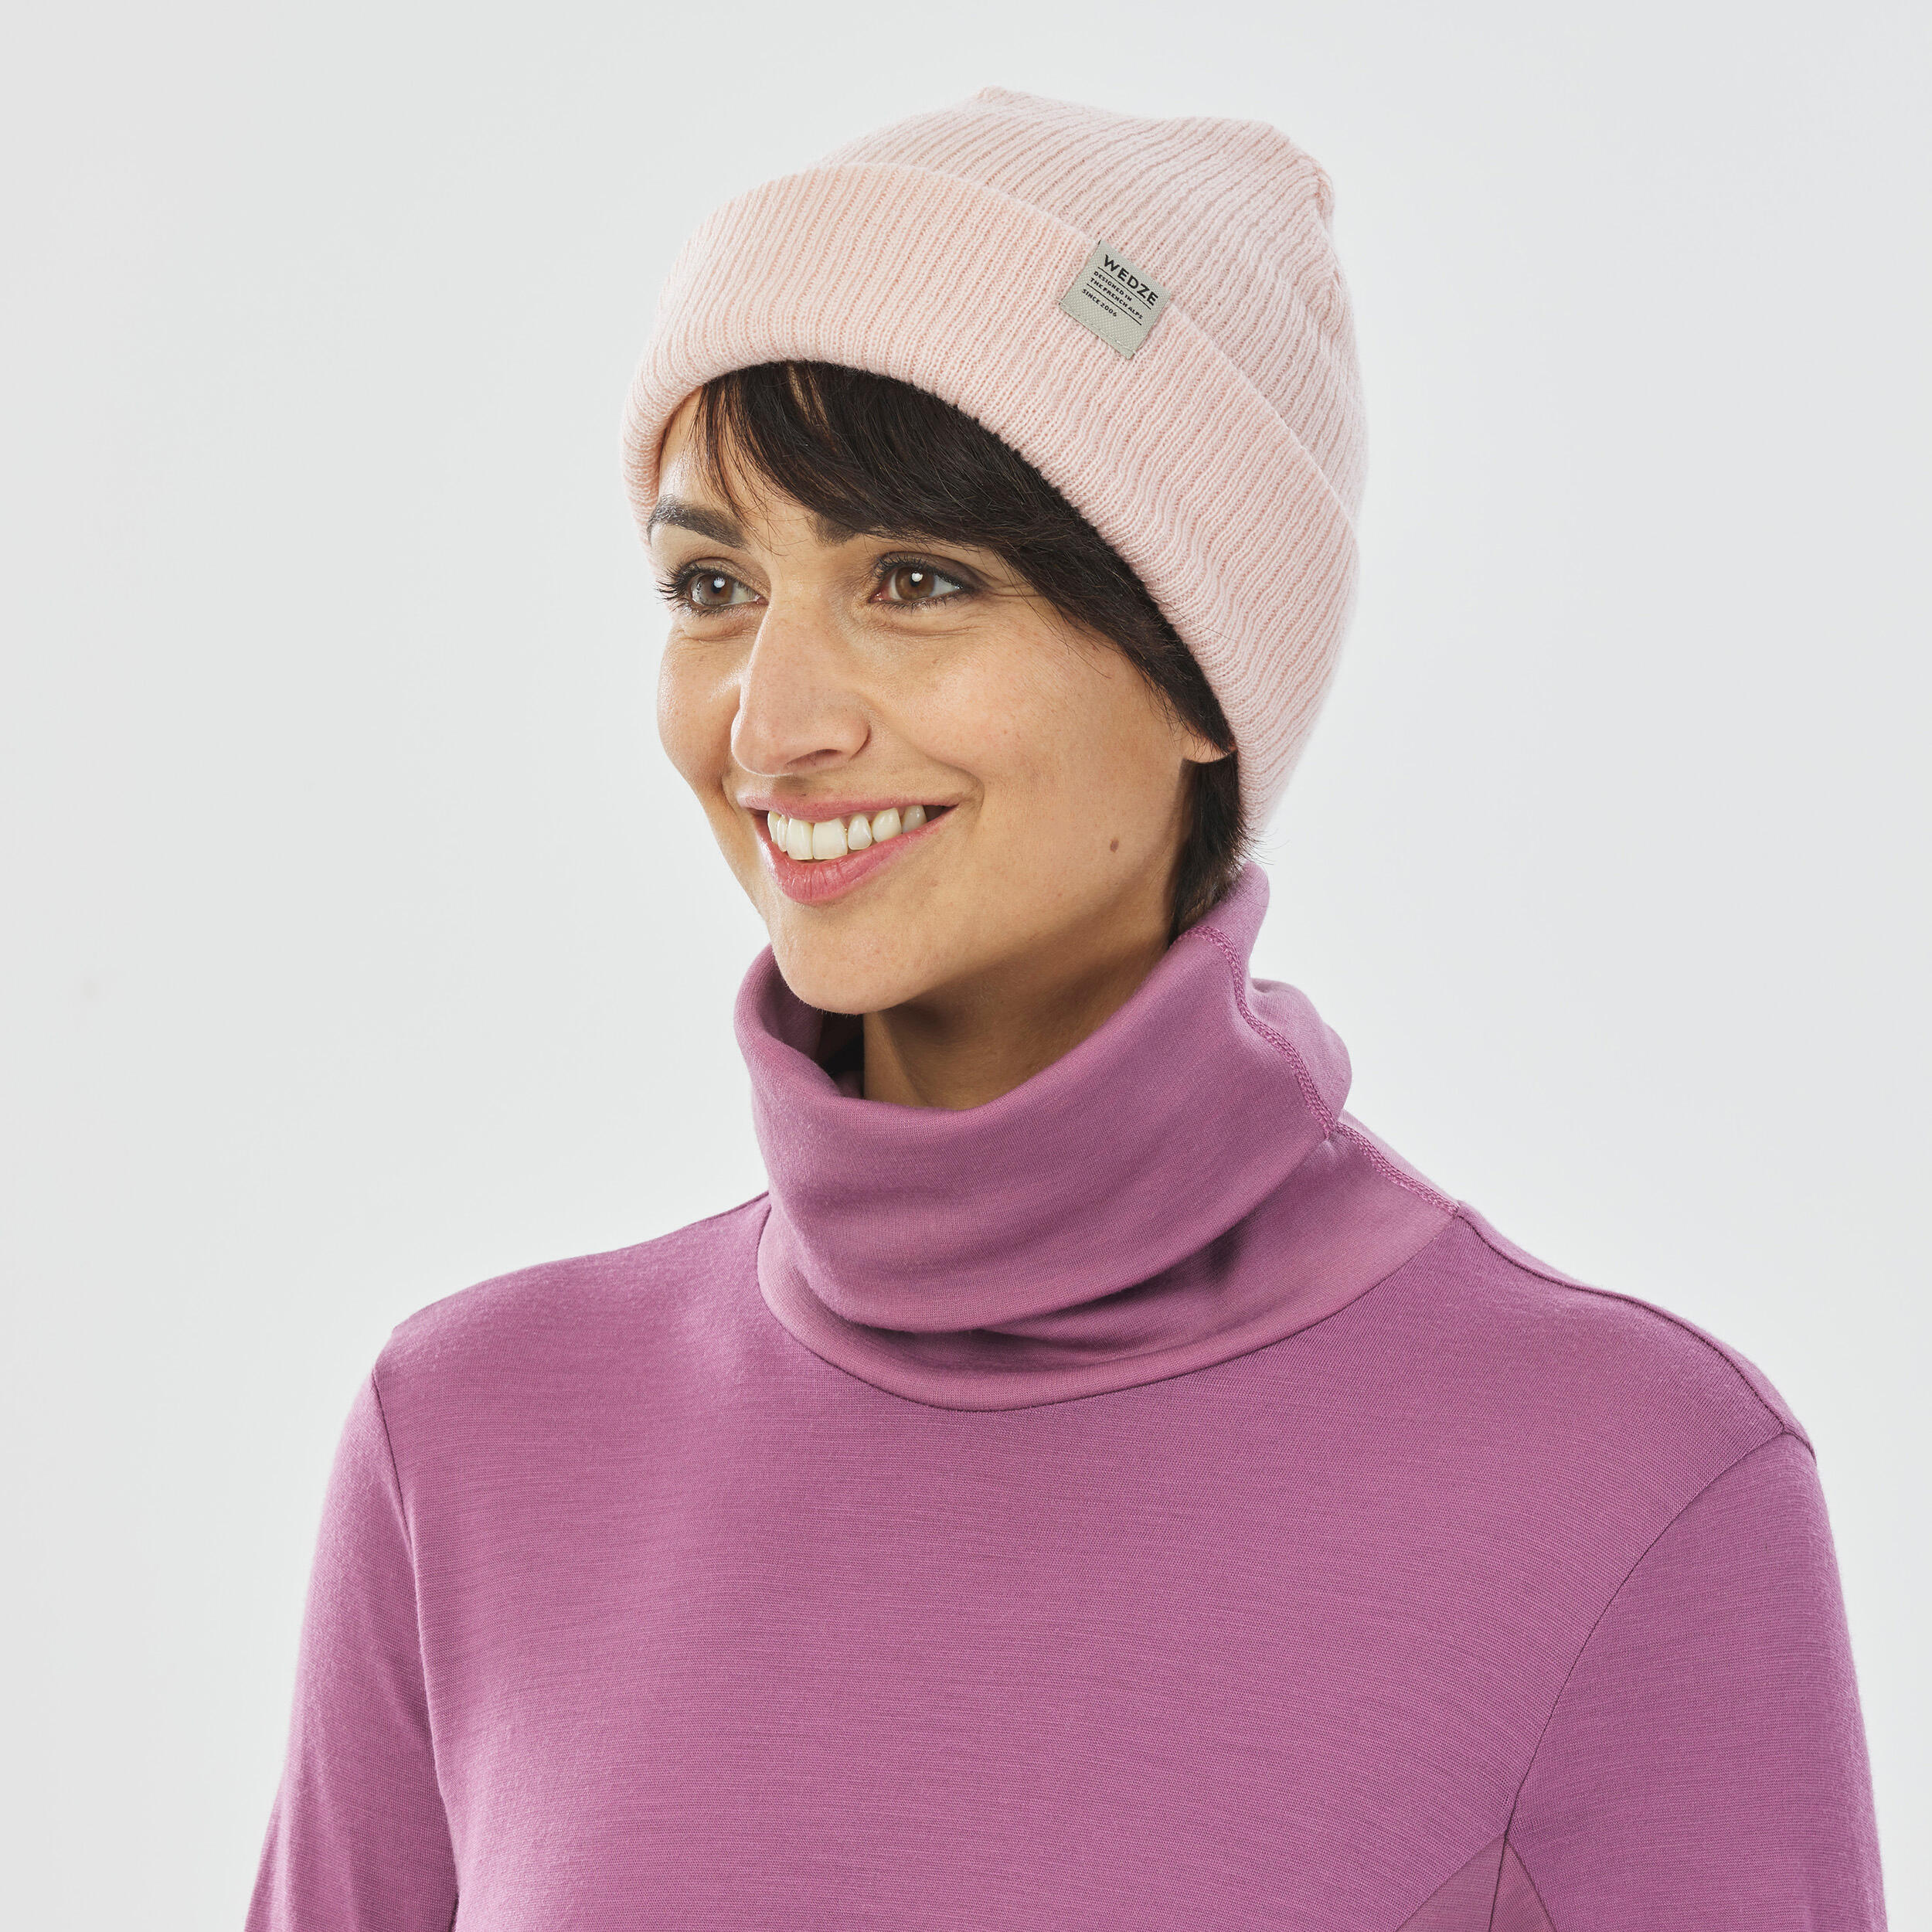 Women’s Ski Base Layer Top - BL 900 Wool High Neck -
Pink 9/10